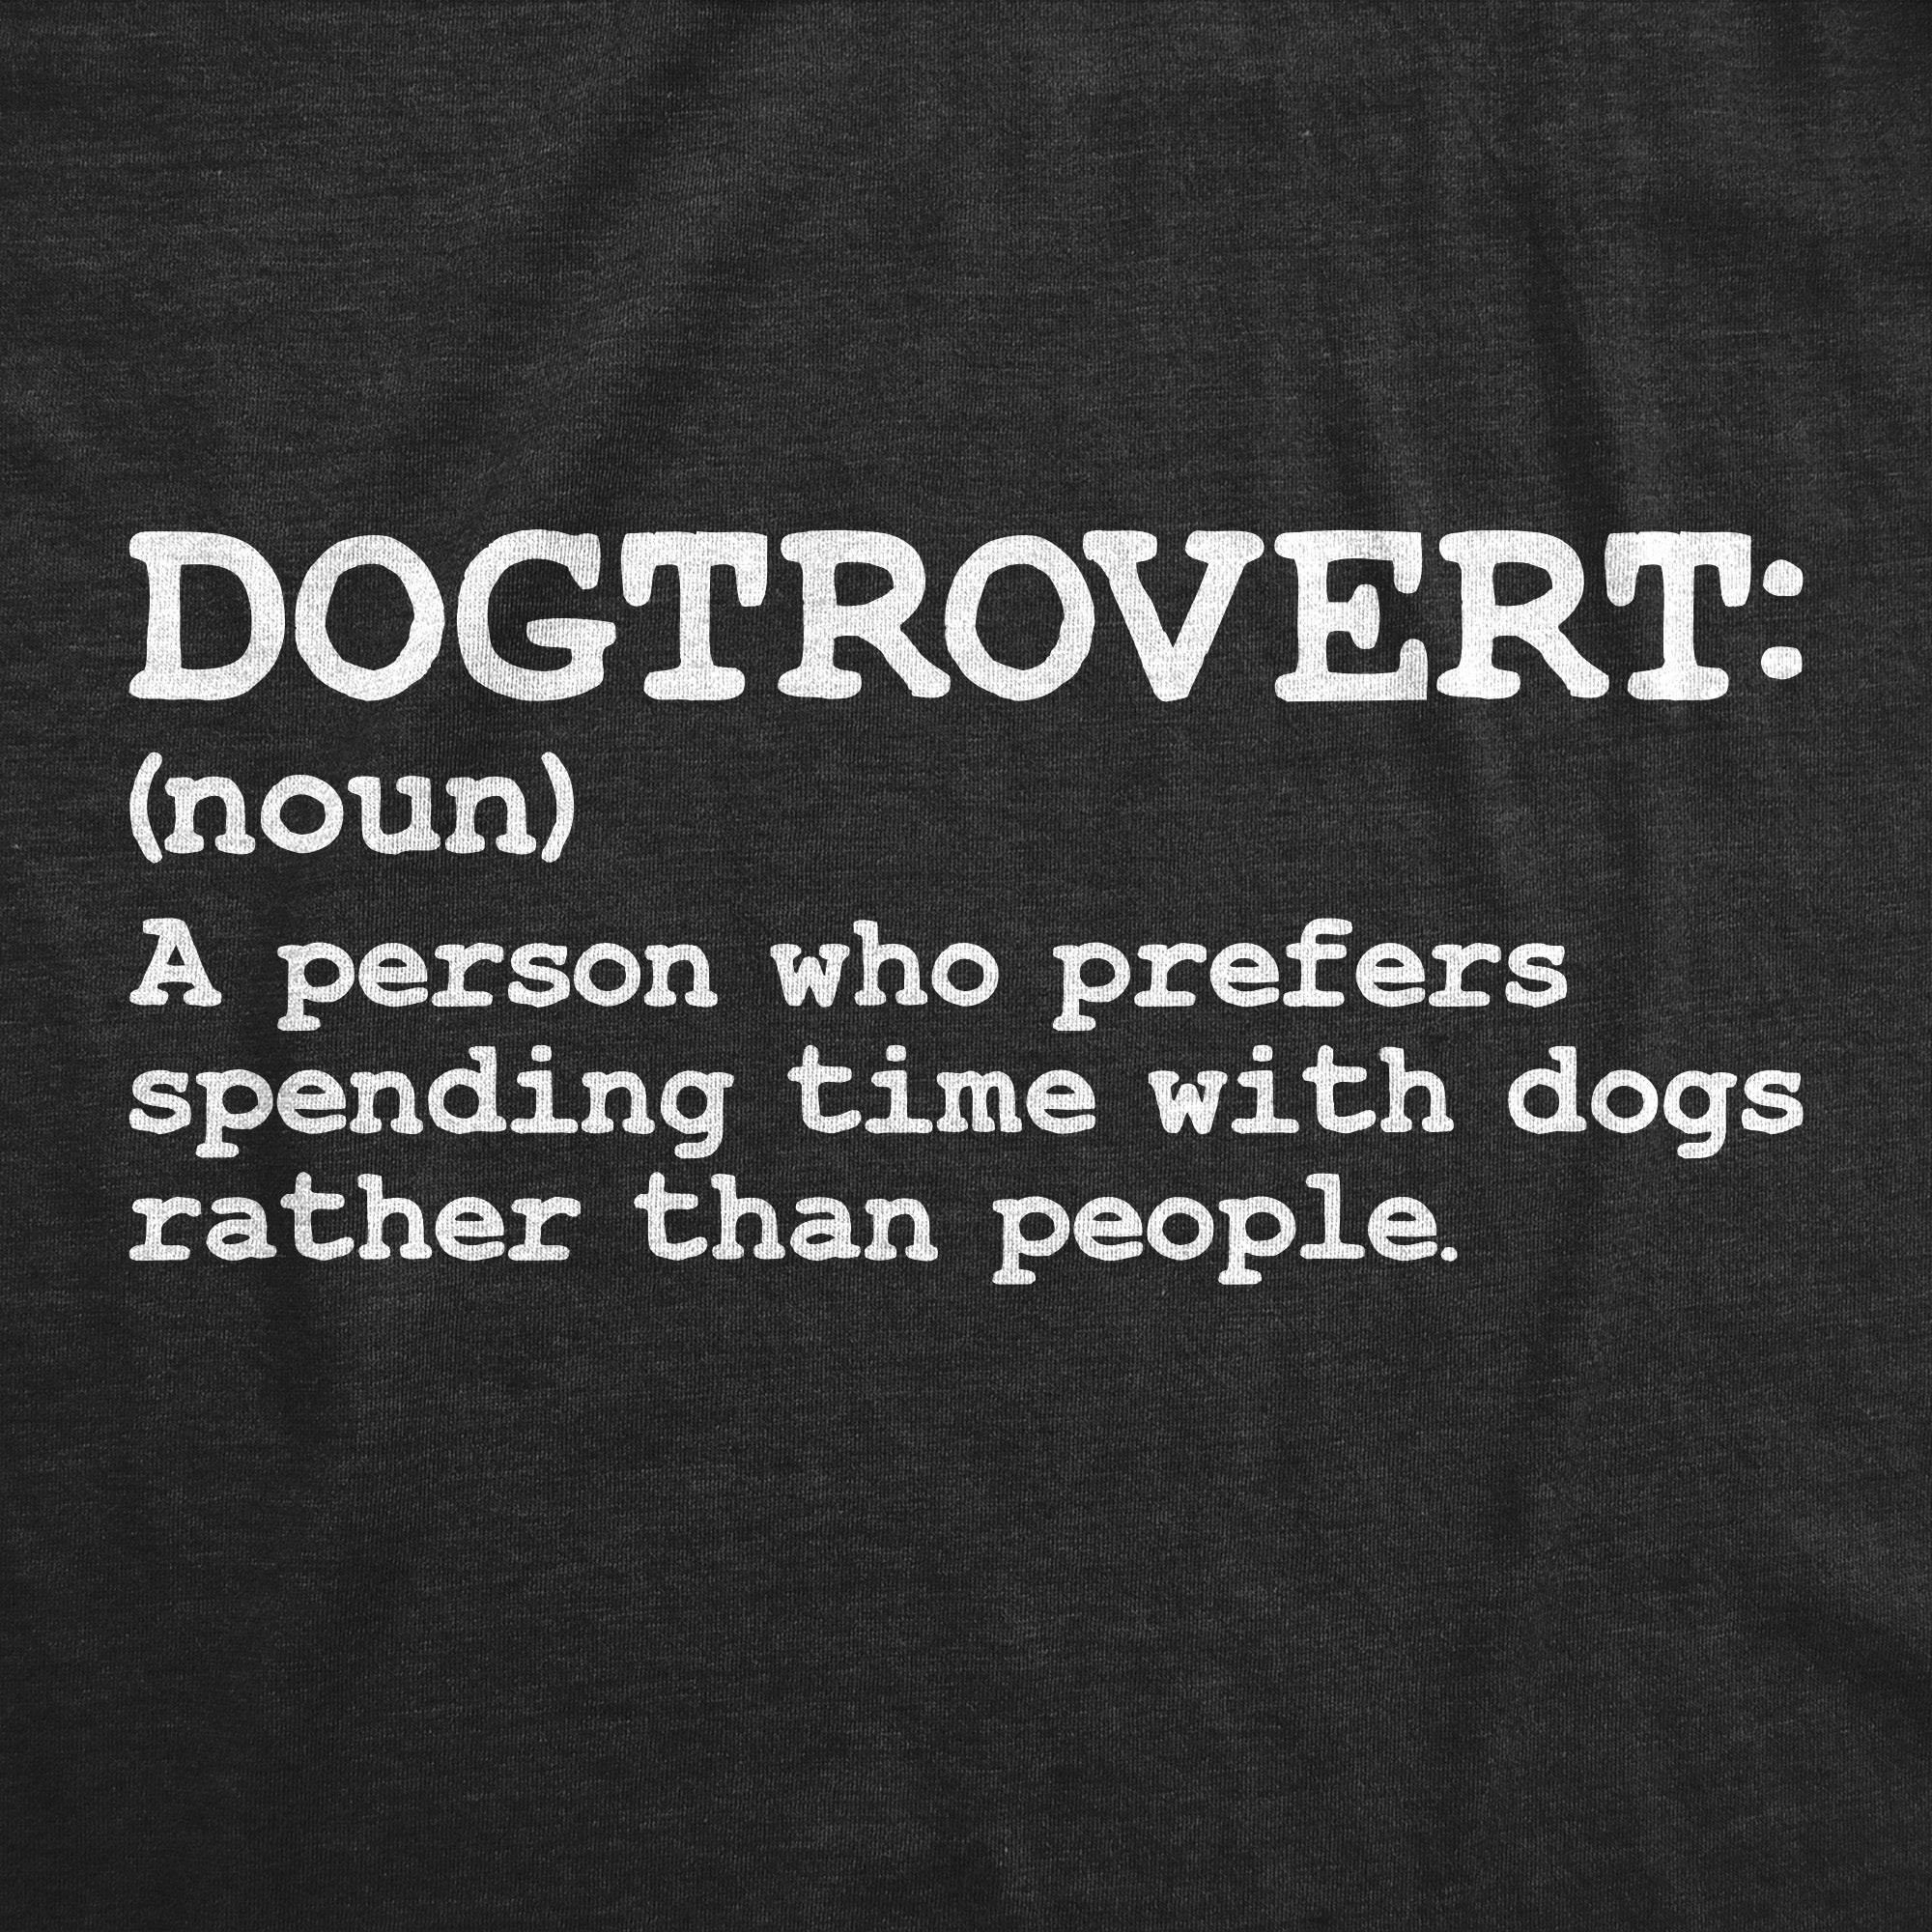 Funny Heather Black - Dogtrovert Dogtrovert Definition Mens T Shirt Nerdy Dog introvert Tee